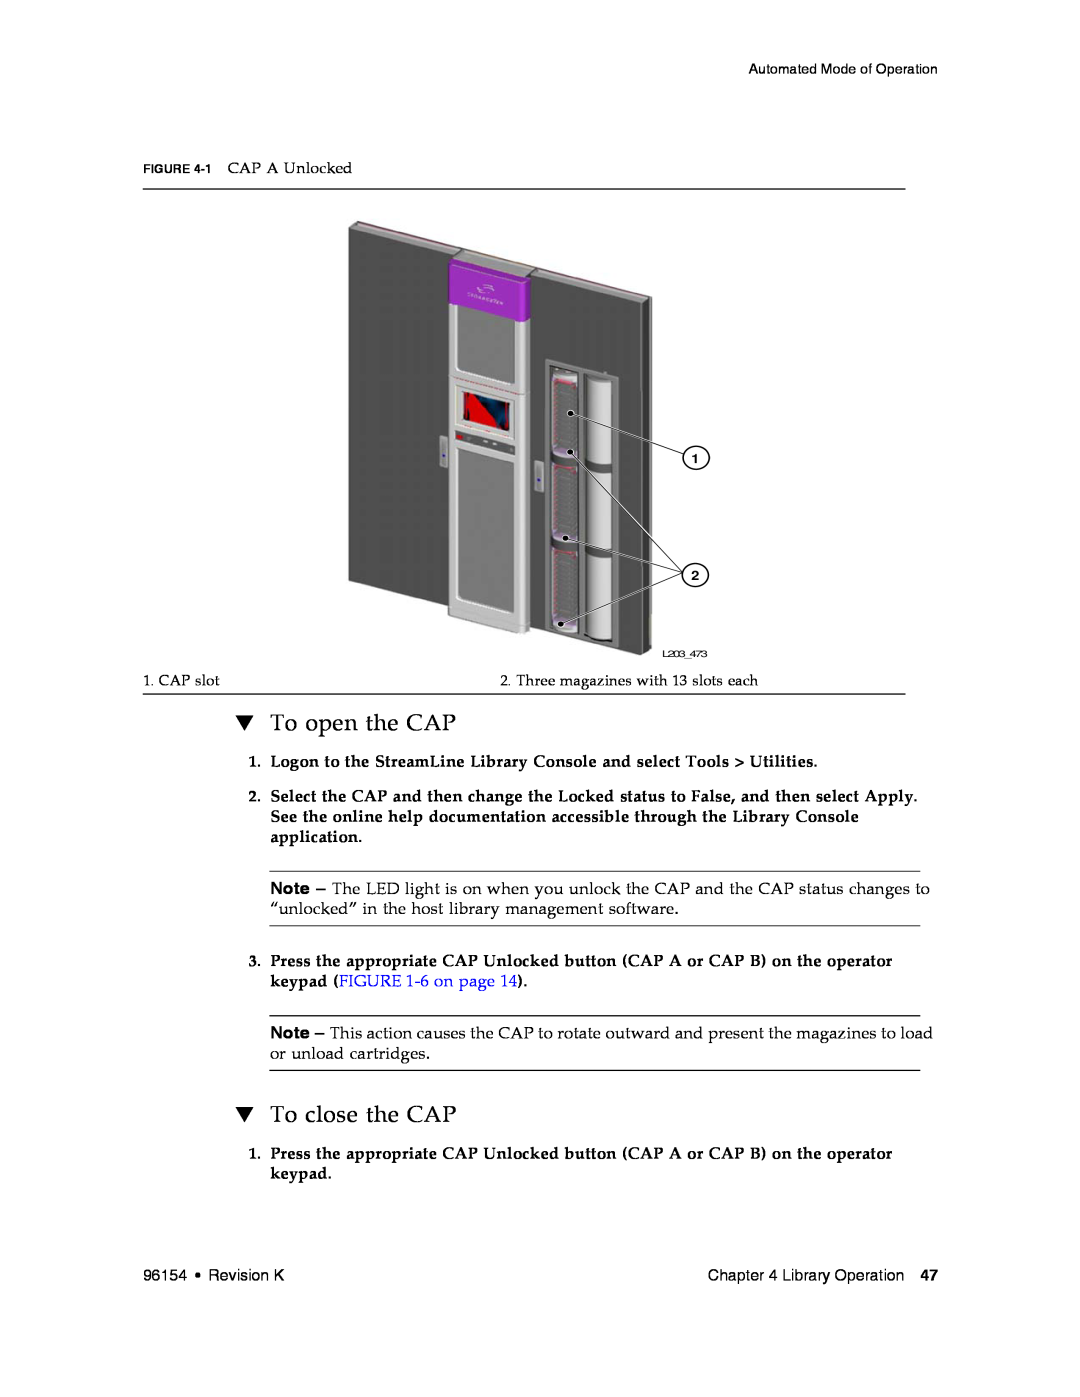 Sun Microsystems SL8500 manual To open the CAP, To close the CAP, 1 CAP A Unlocked 